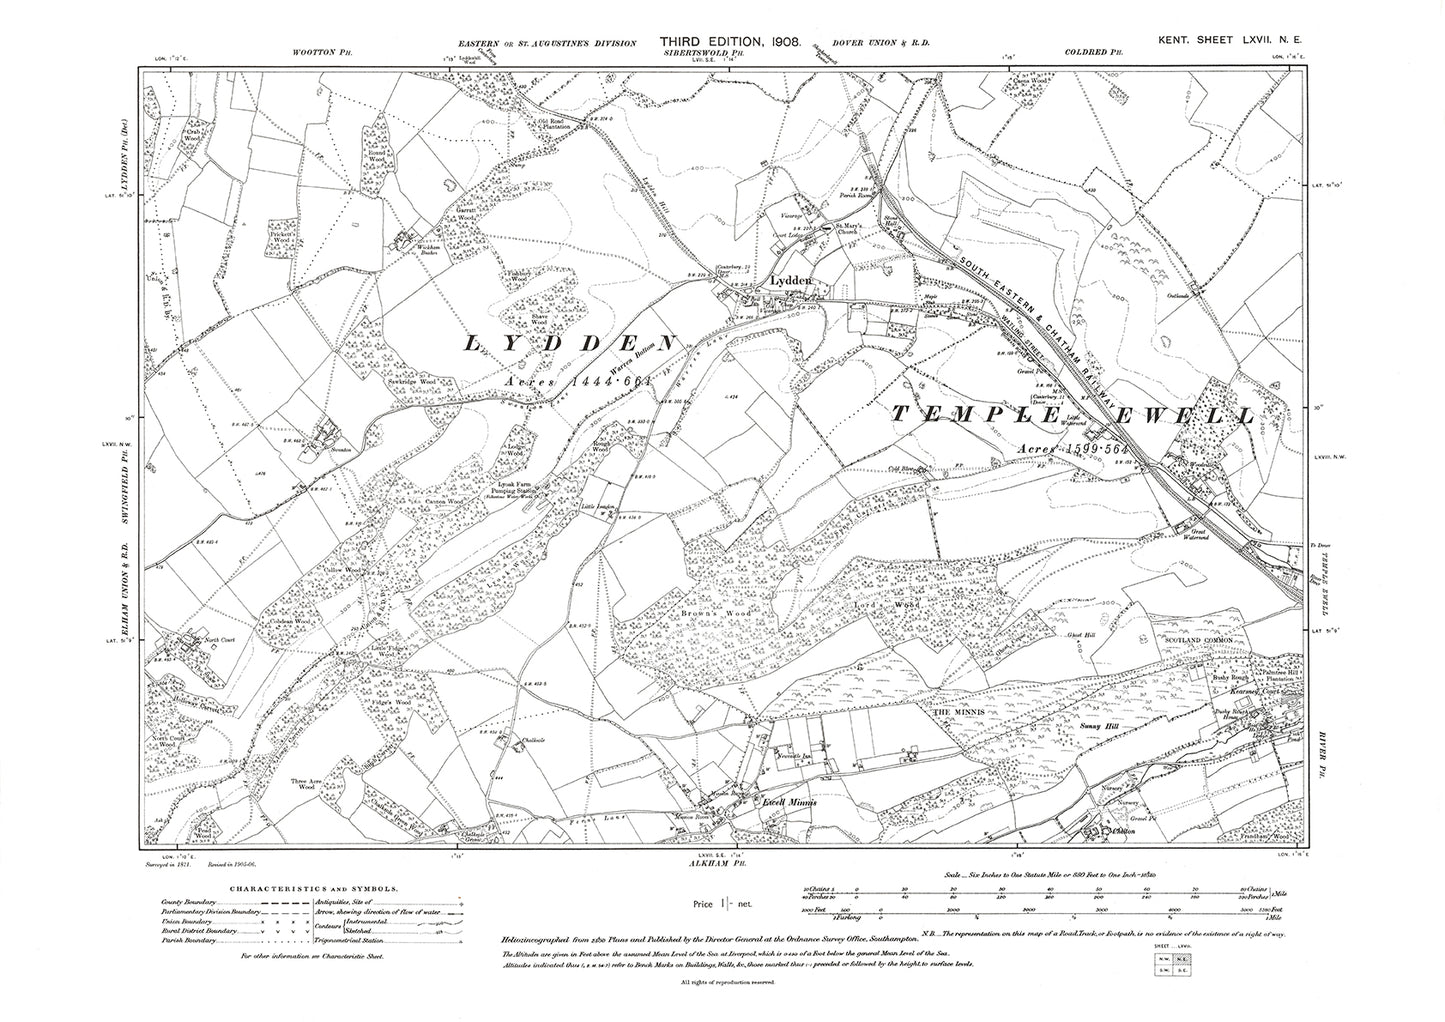 Lydden, Temple Ewell, Ewell Minnis, old map Kent 1908: 67NE